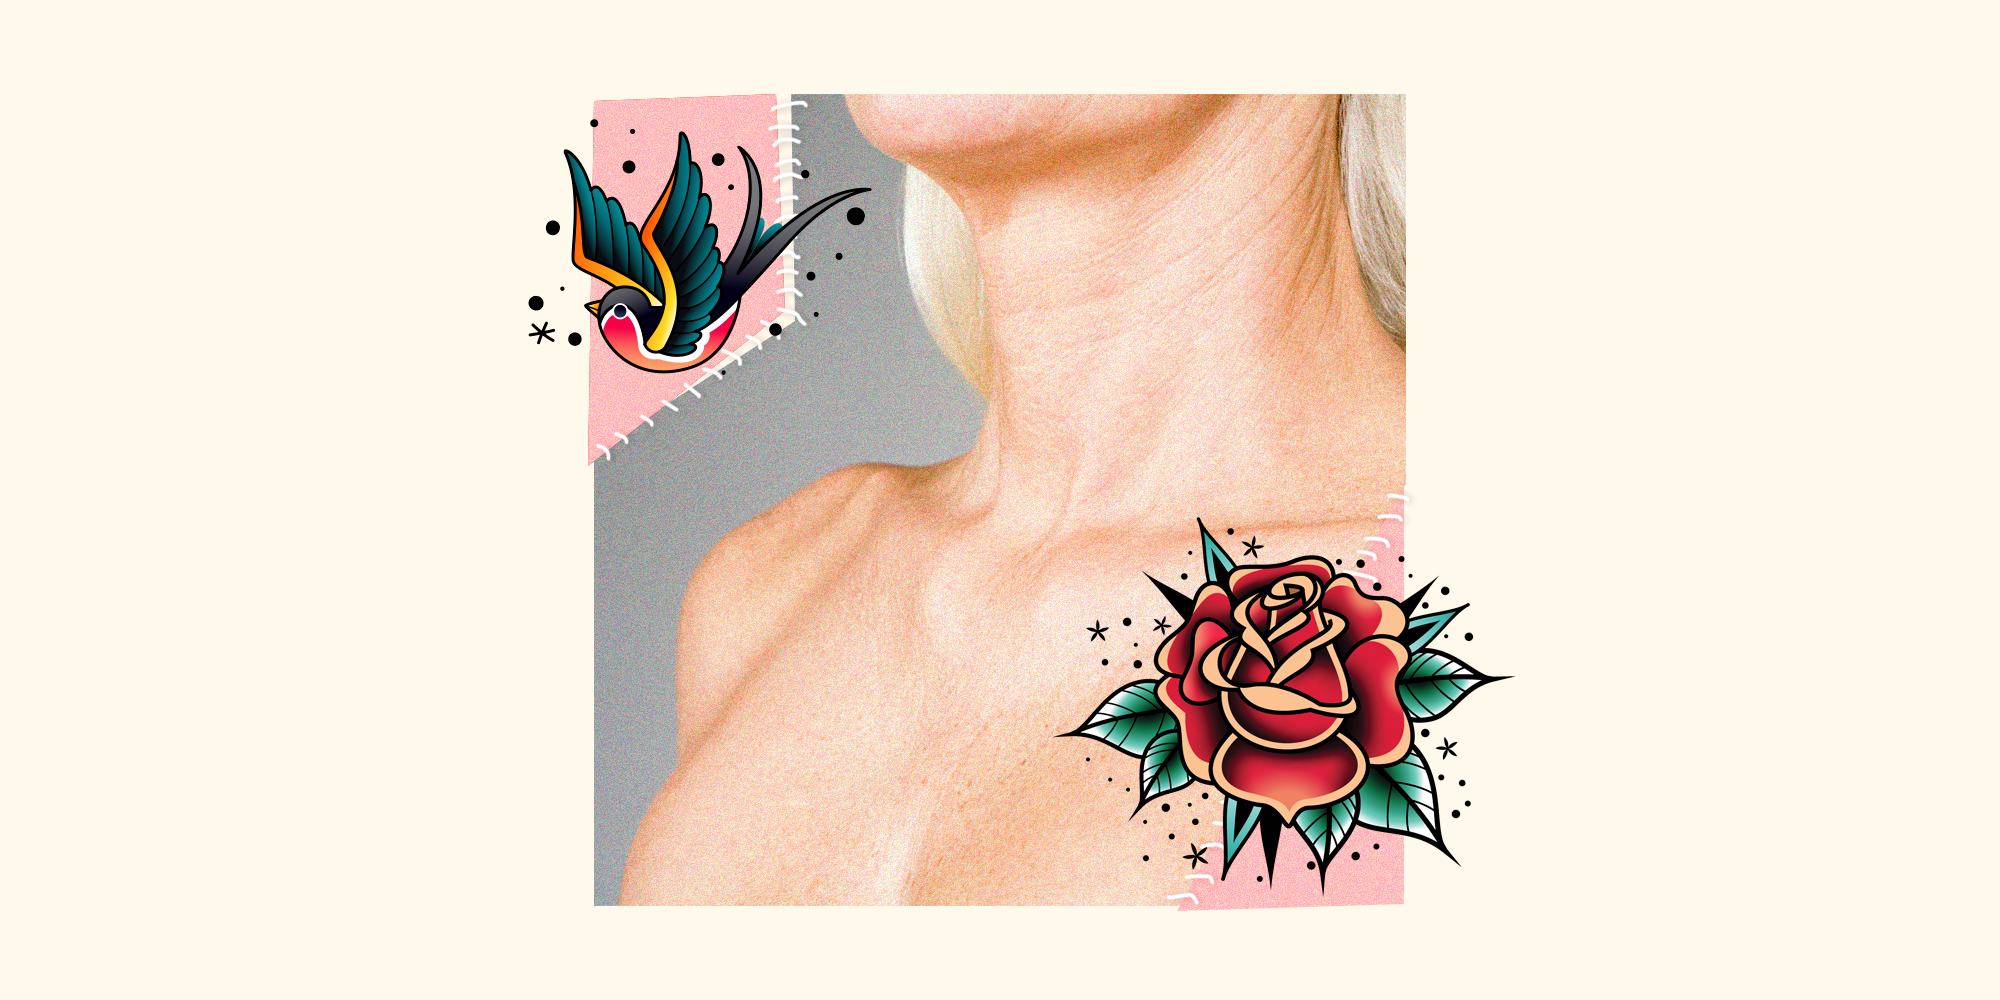 Mastectomy Scar Cover-Up by Adam Sky, Morningstar Tattoo, Belmont,  California : r/tattoos